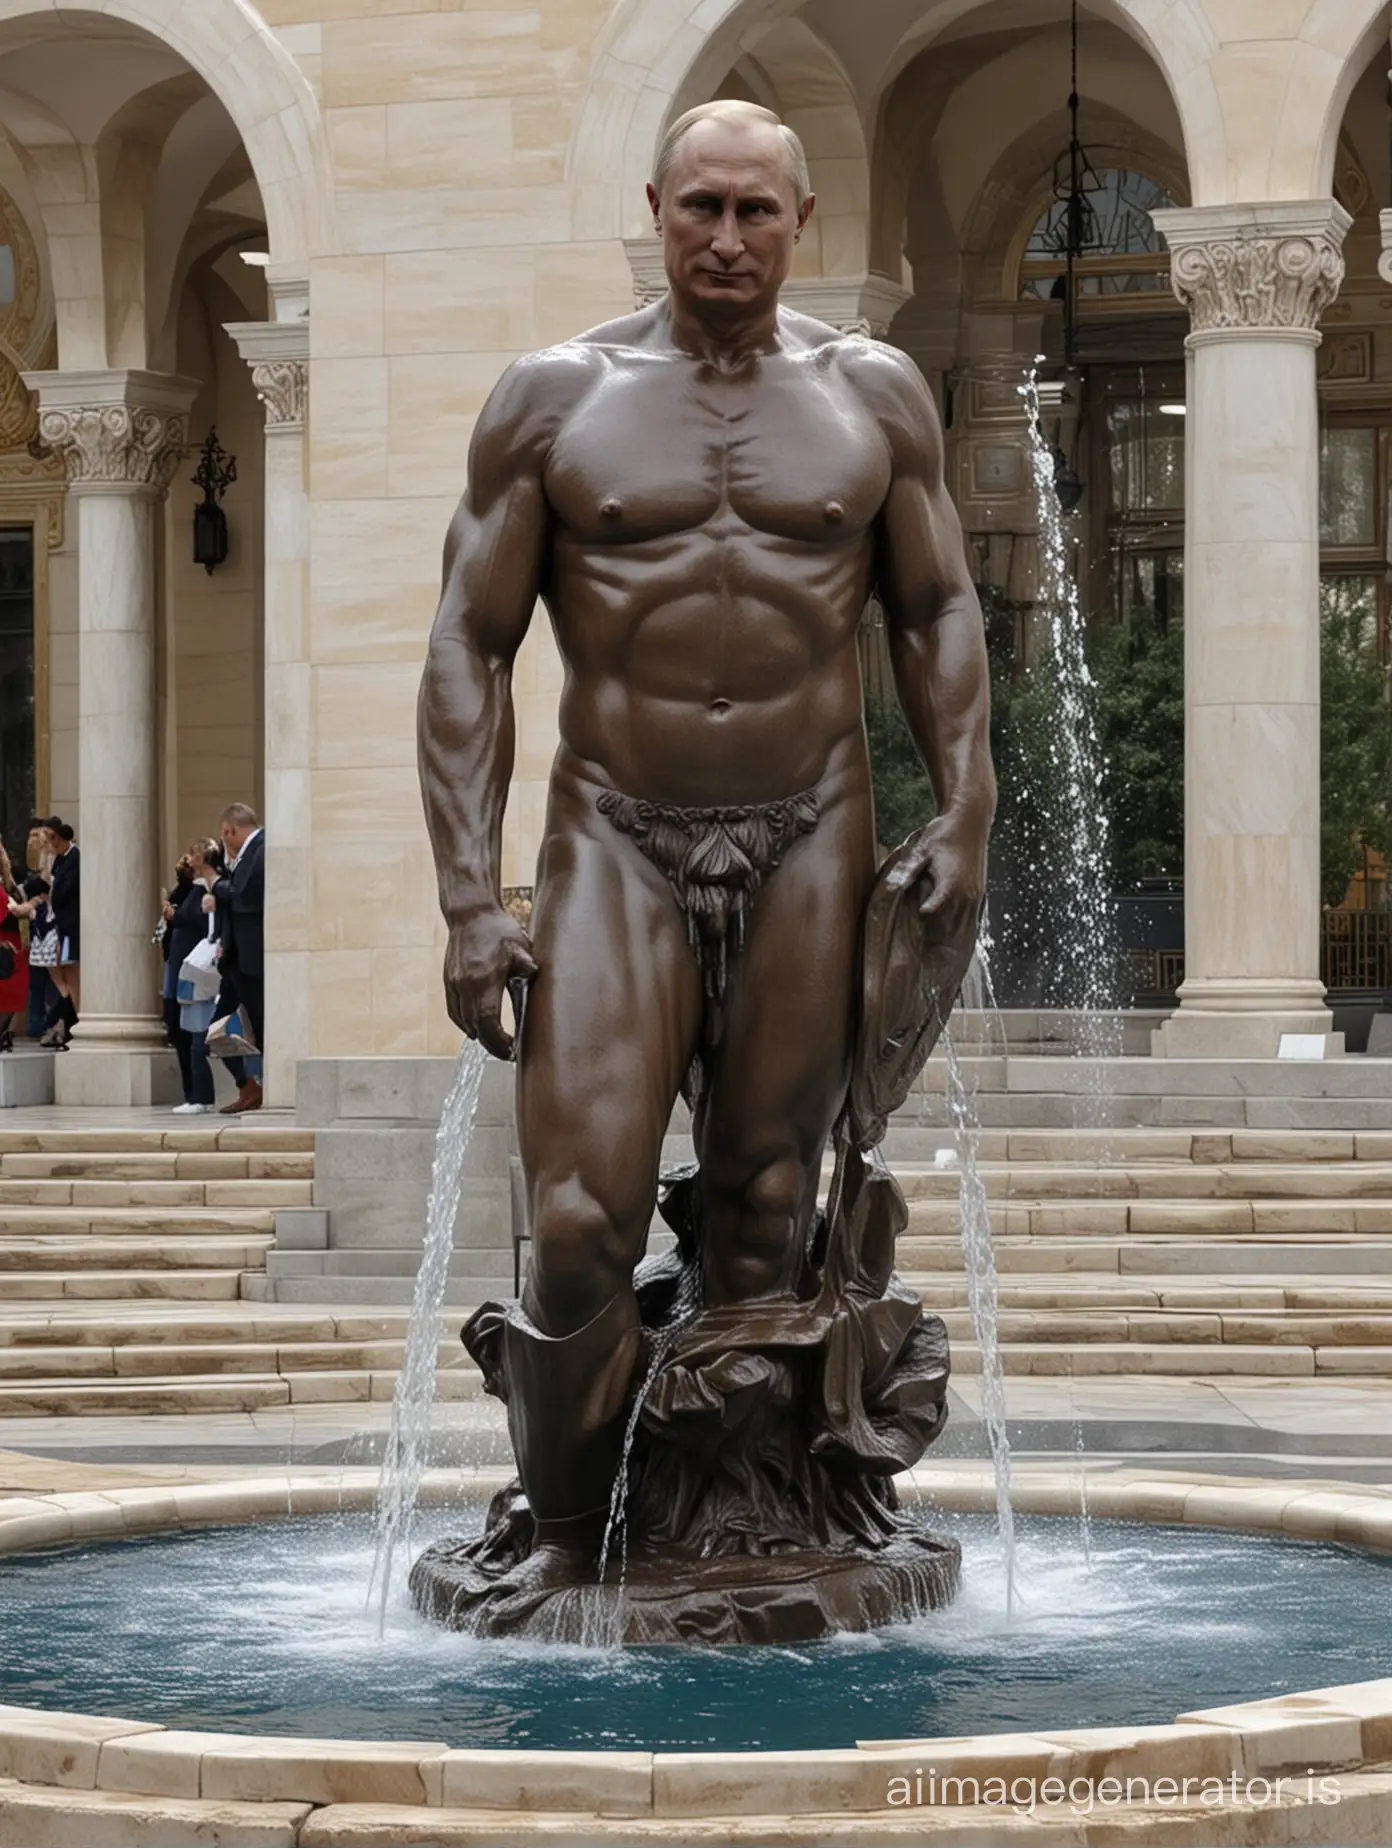 Vladimir Putin in fountain statue Greek